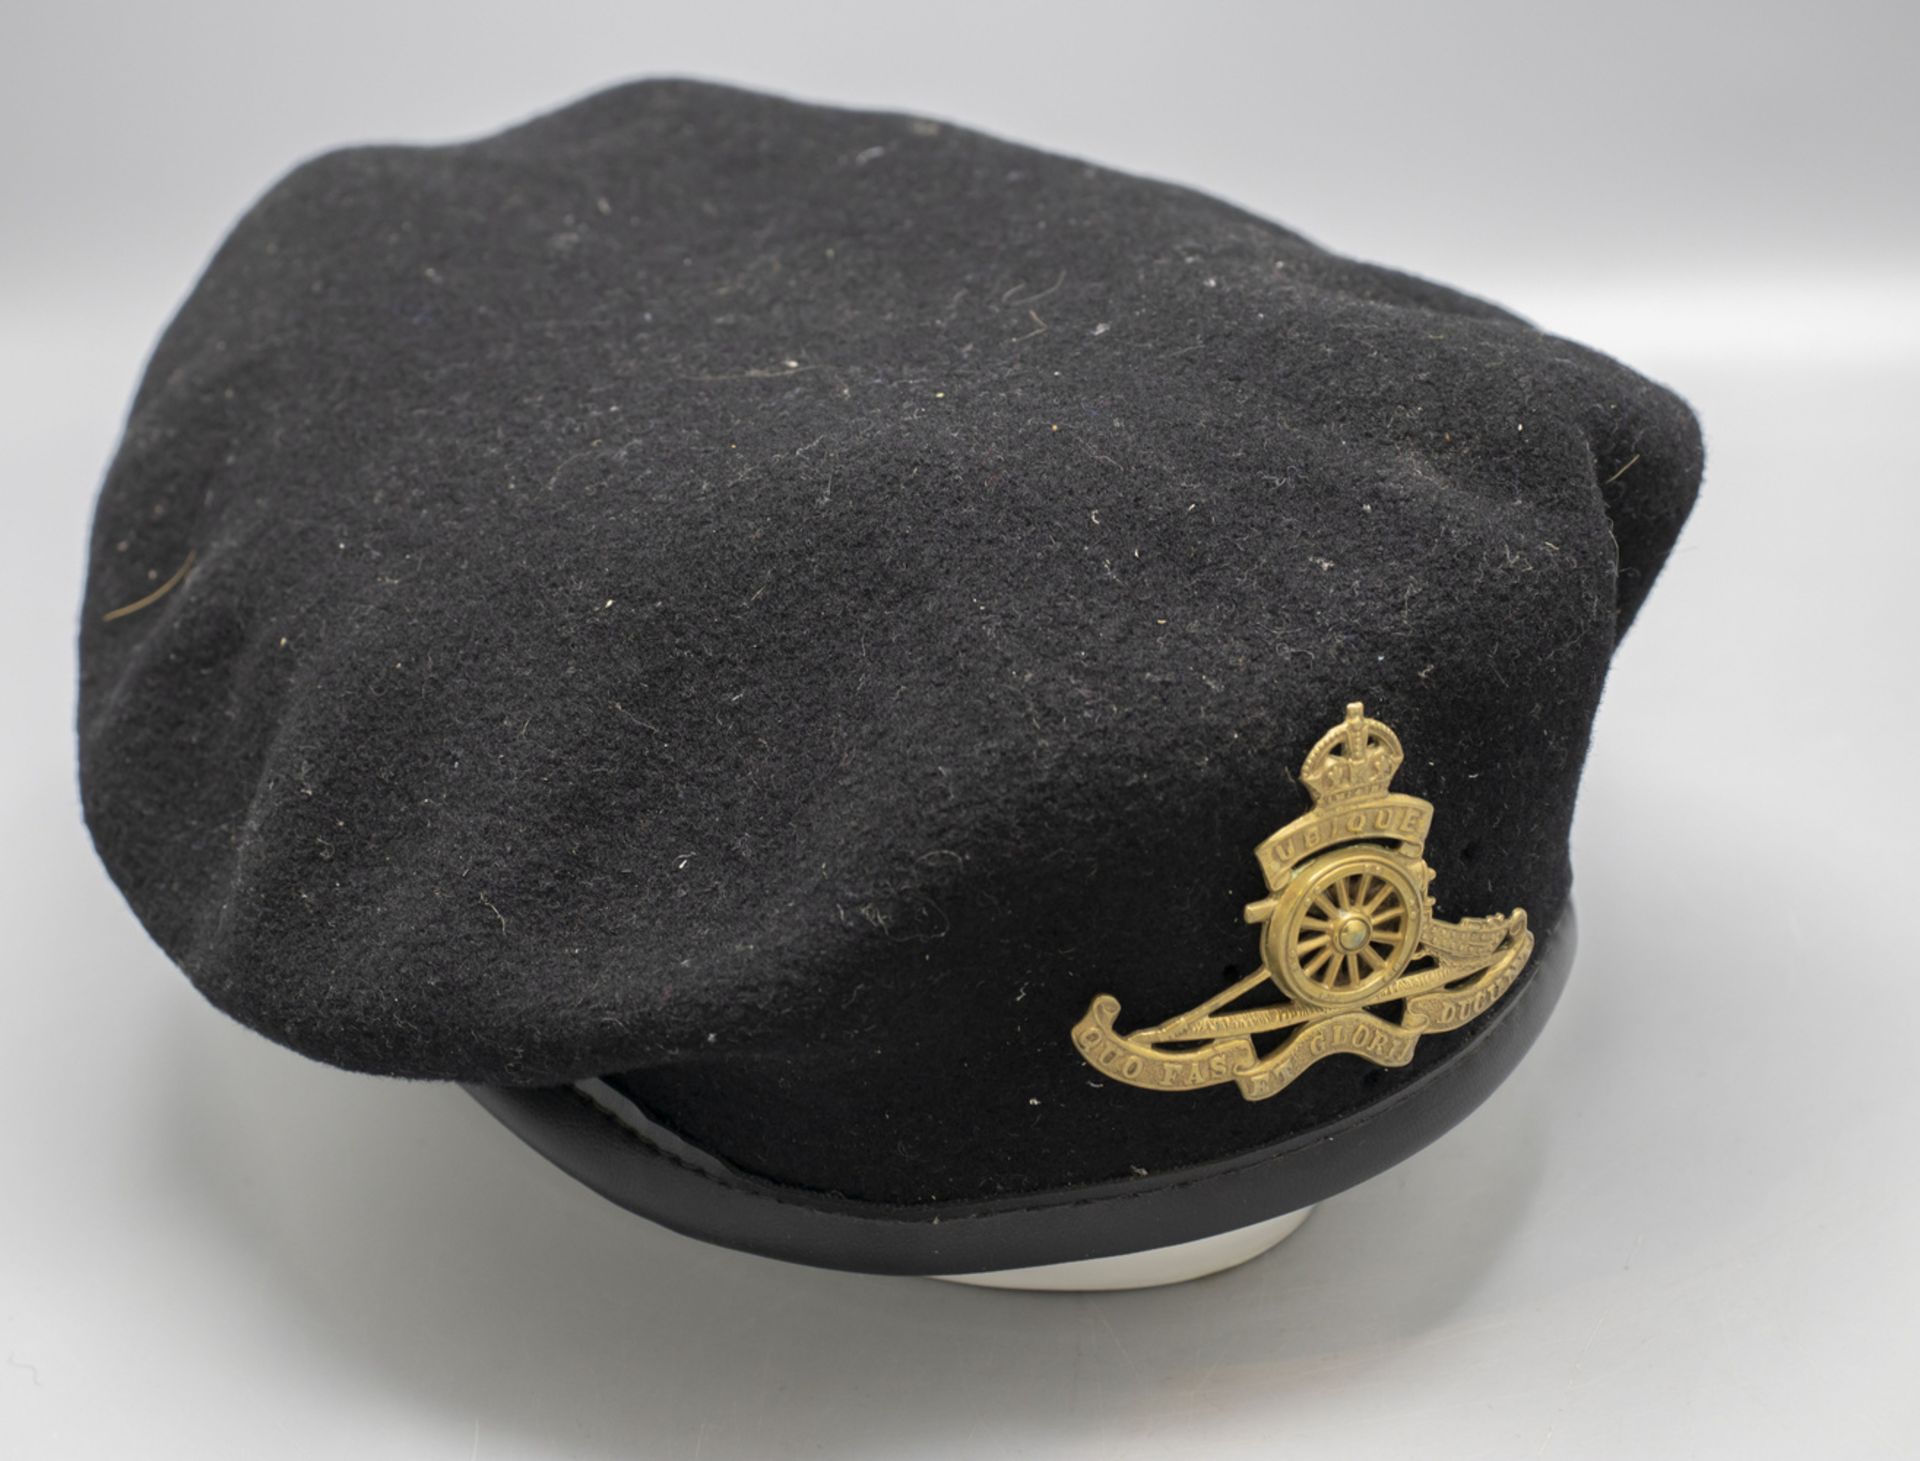 Mütze mit dem Wappen der Royal Artillery  / A cap with the emblem of the Royal Artillery